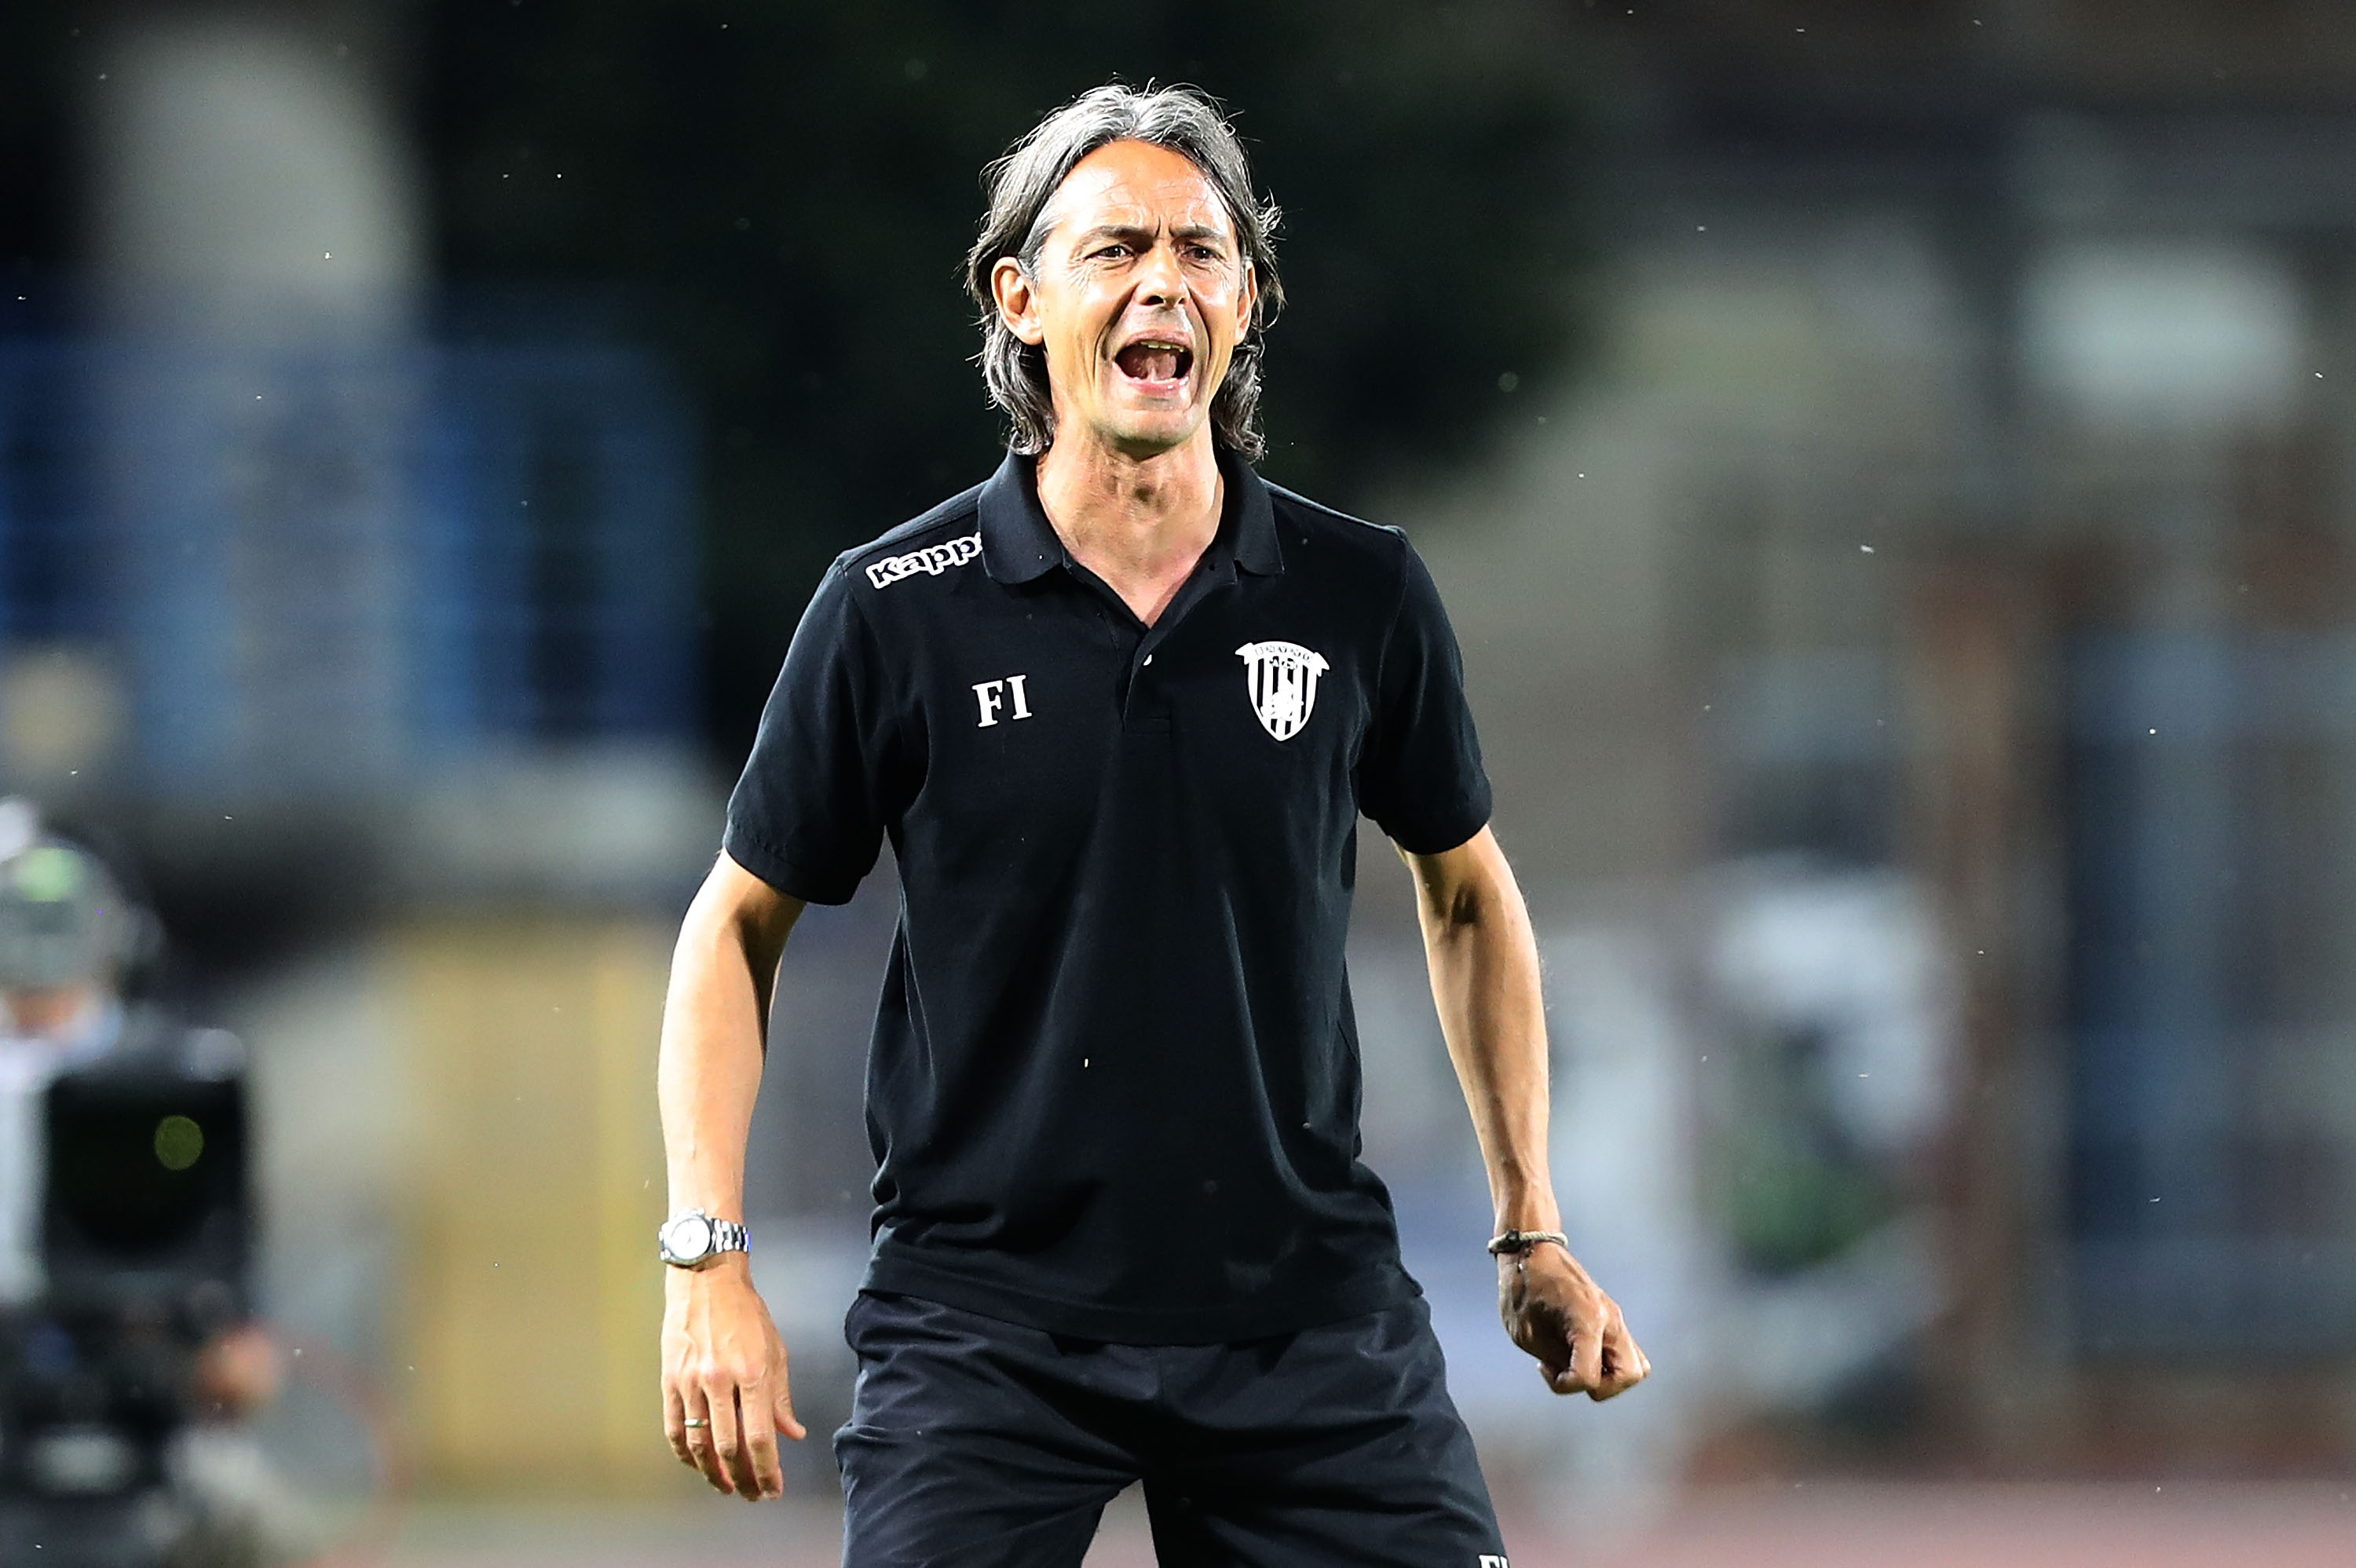 Tim Ini Promosi ke Serie A, Ada 'Derby Inzaghi' Musim Depan